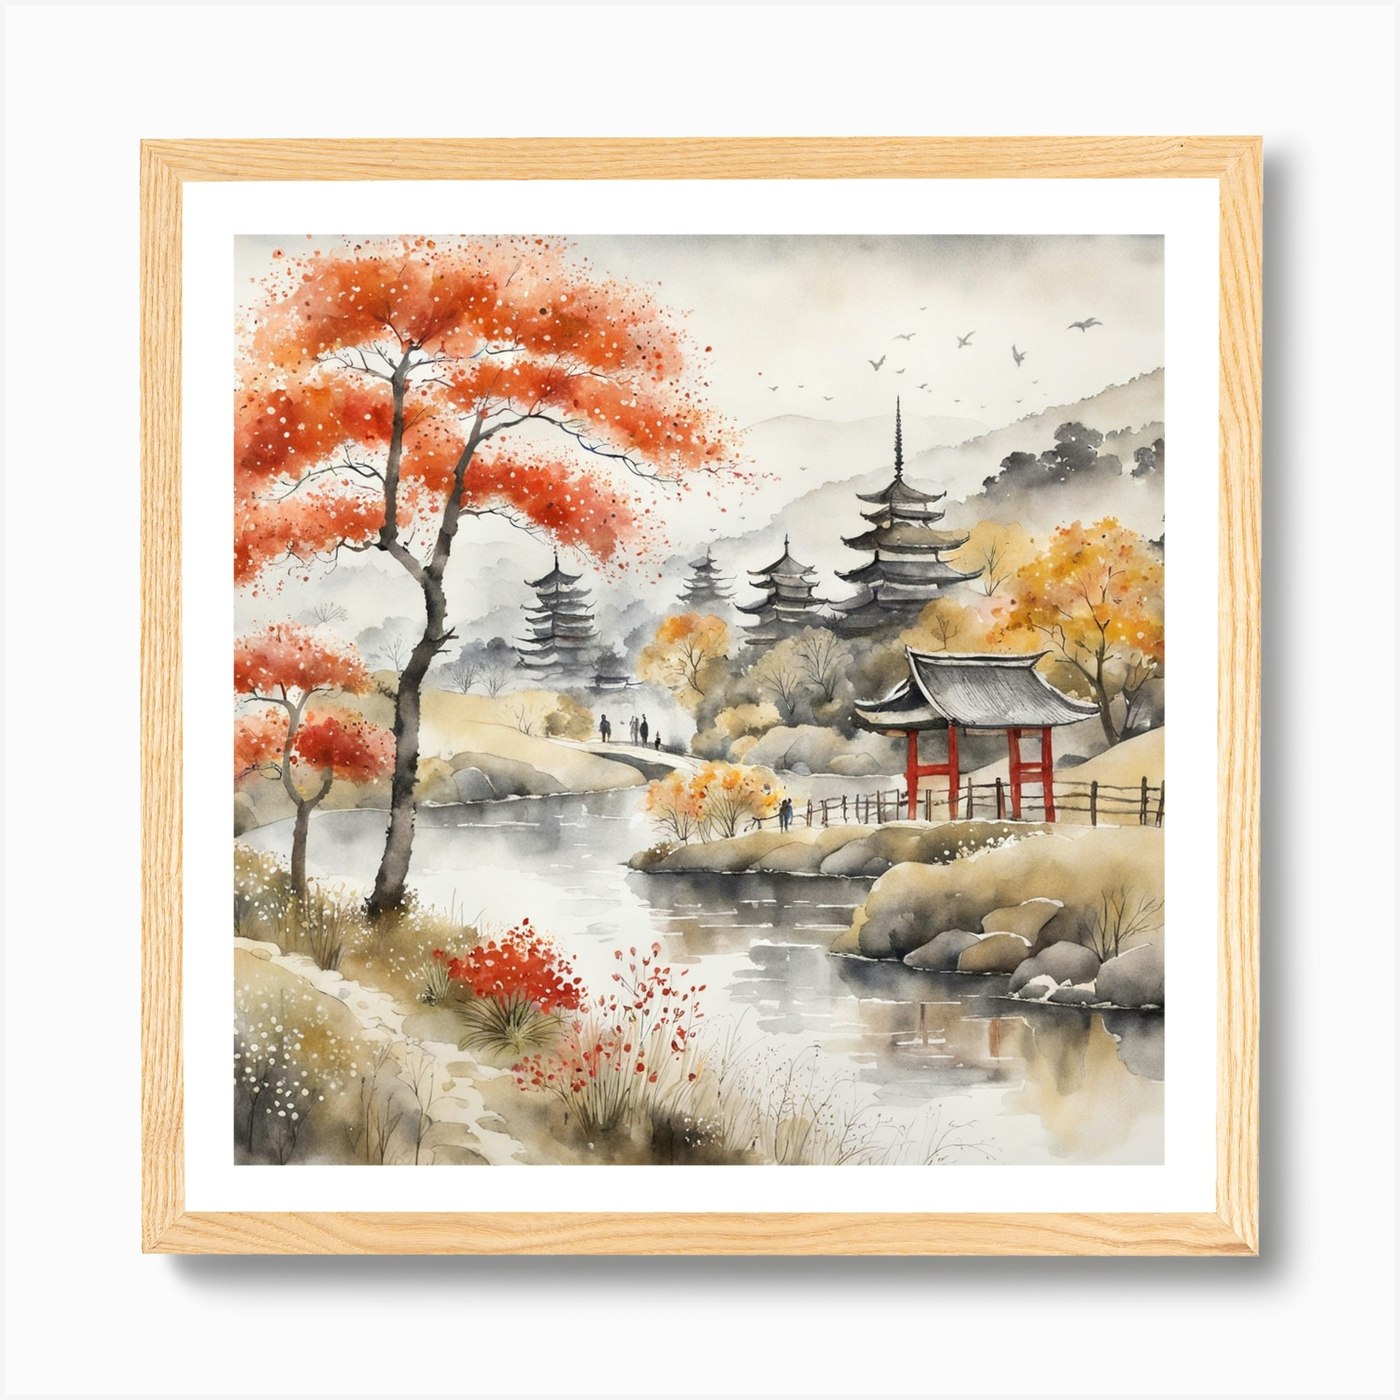 japanese watercolor landscape - Google Search  Landscape paintings,  Chinese landscape painting, Watercolor landscape paintings